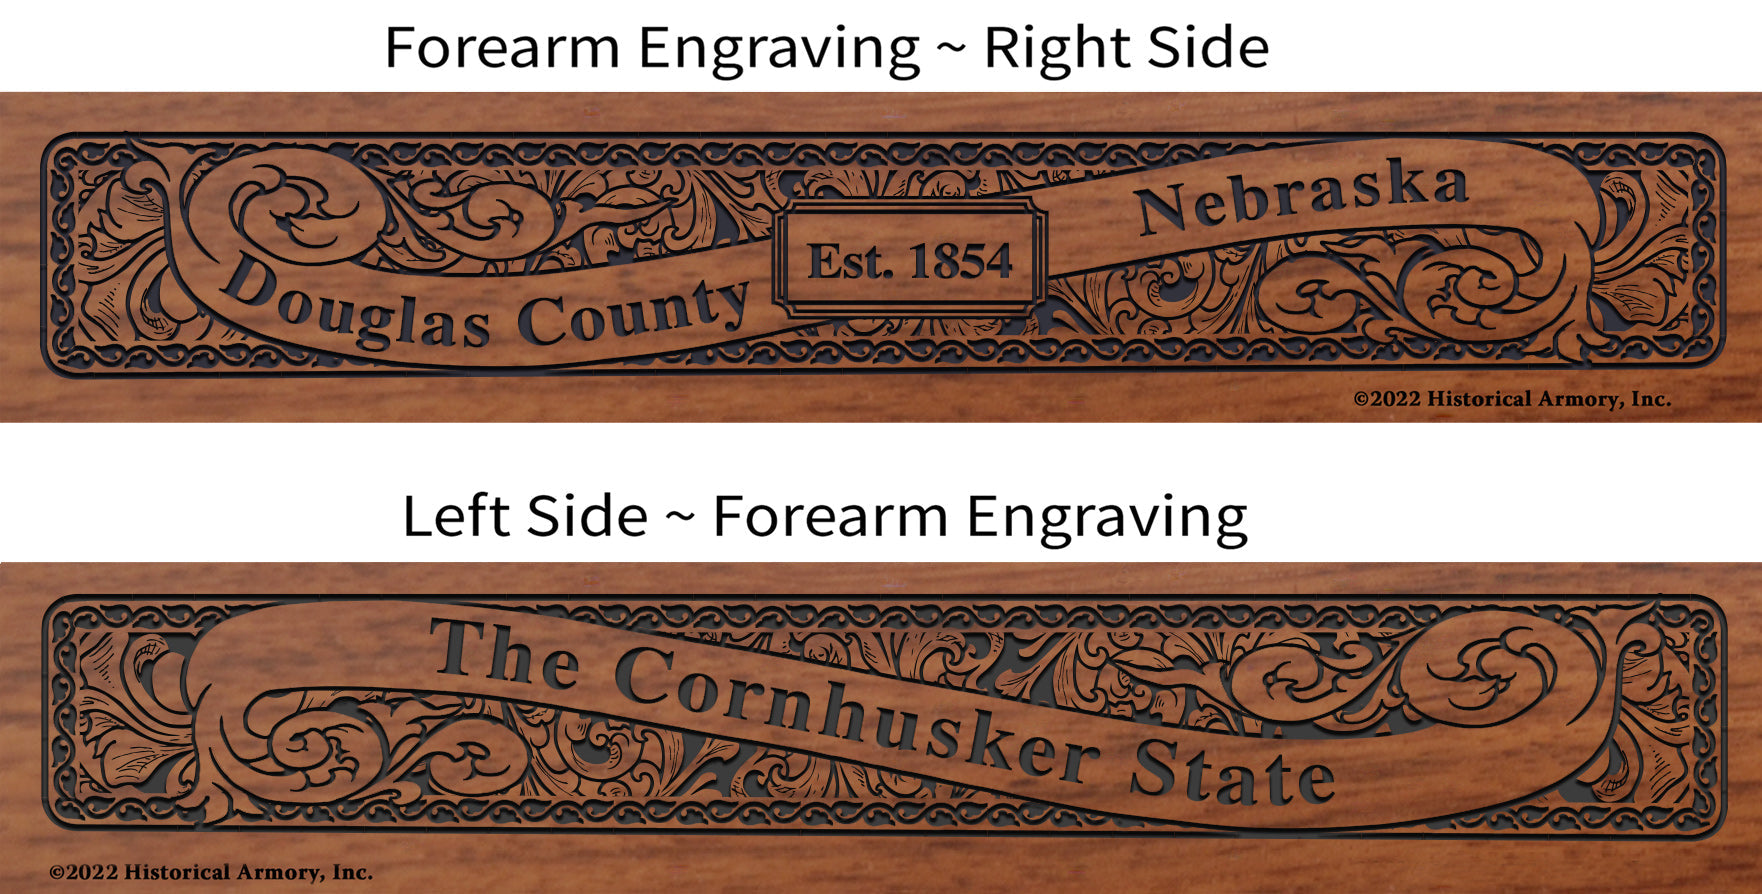 Douglas County Nebraska Engraved Rifle Forearm